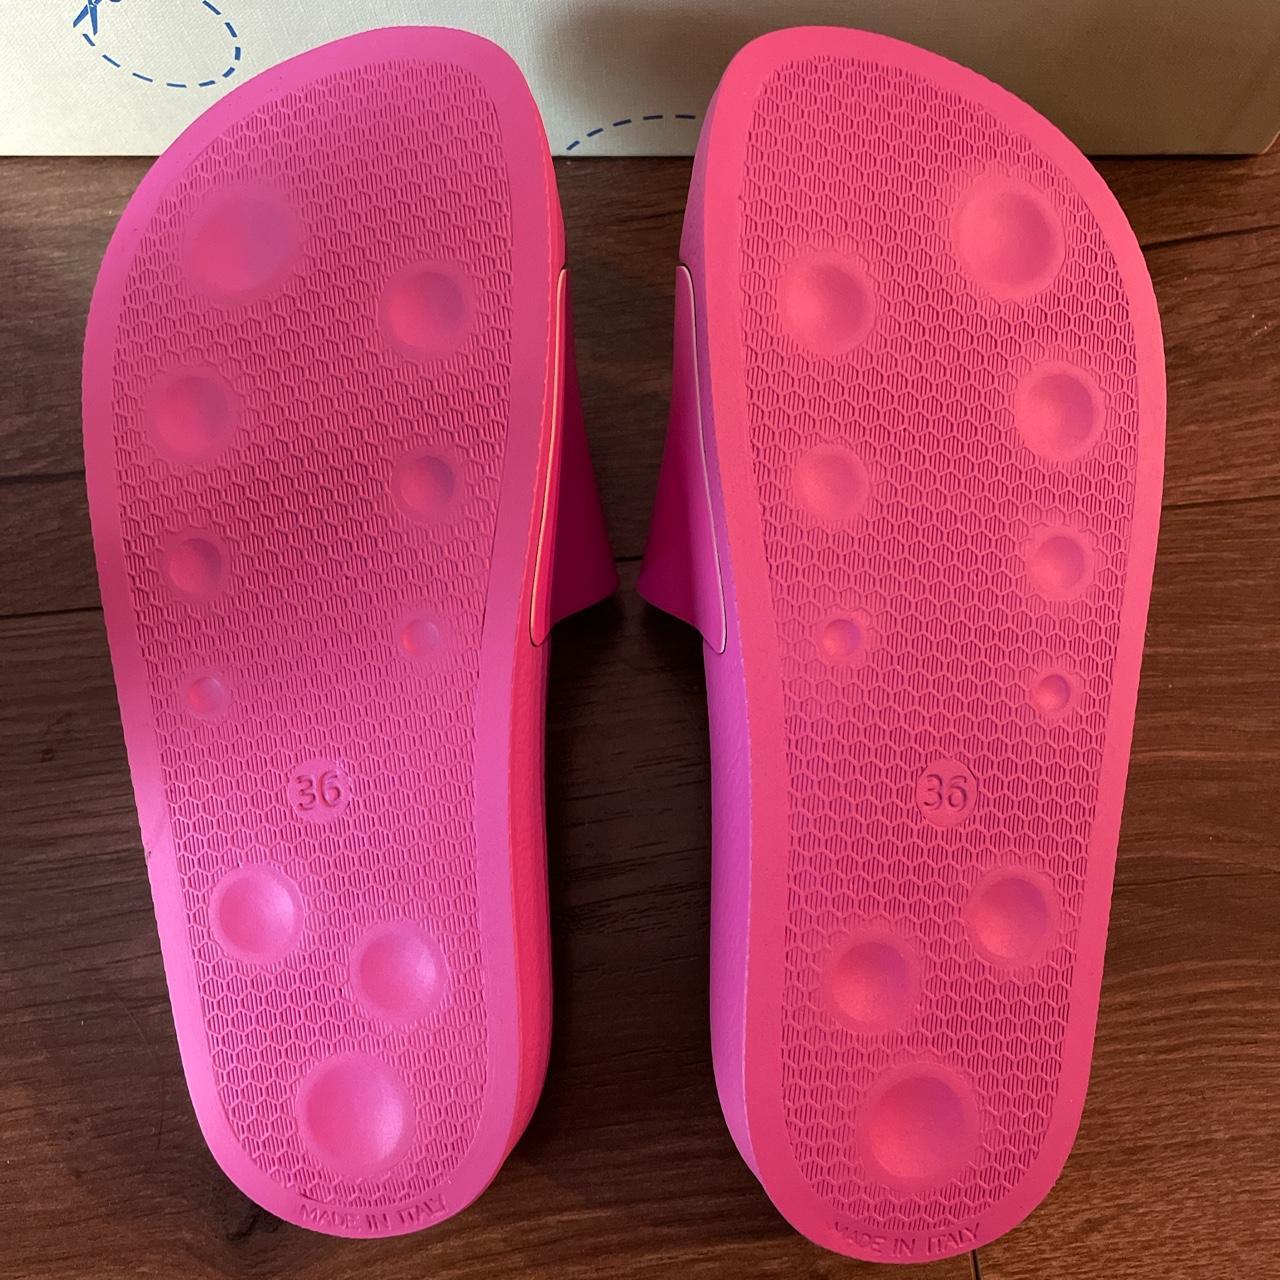 Off-White Women's Pink Slides (3)